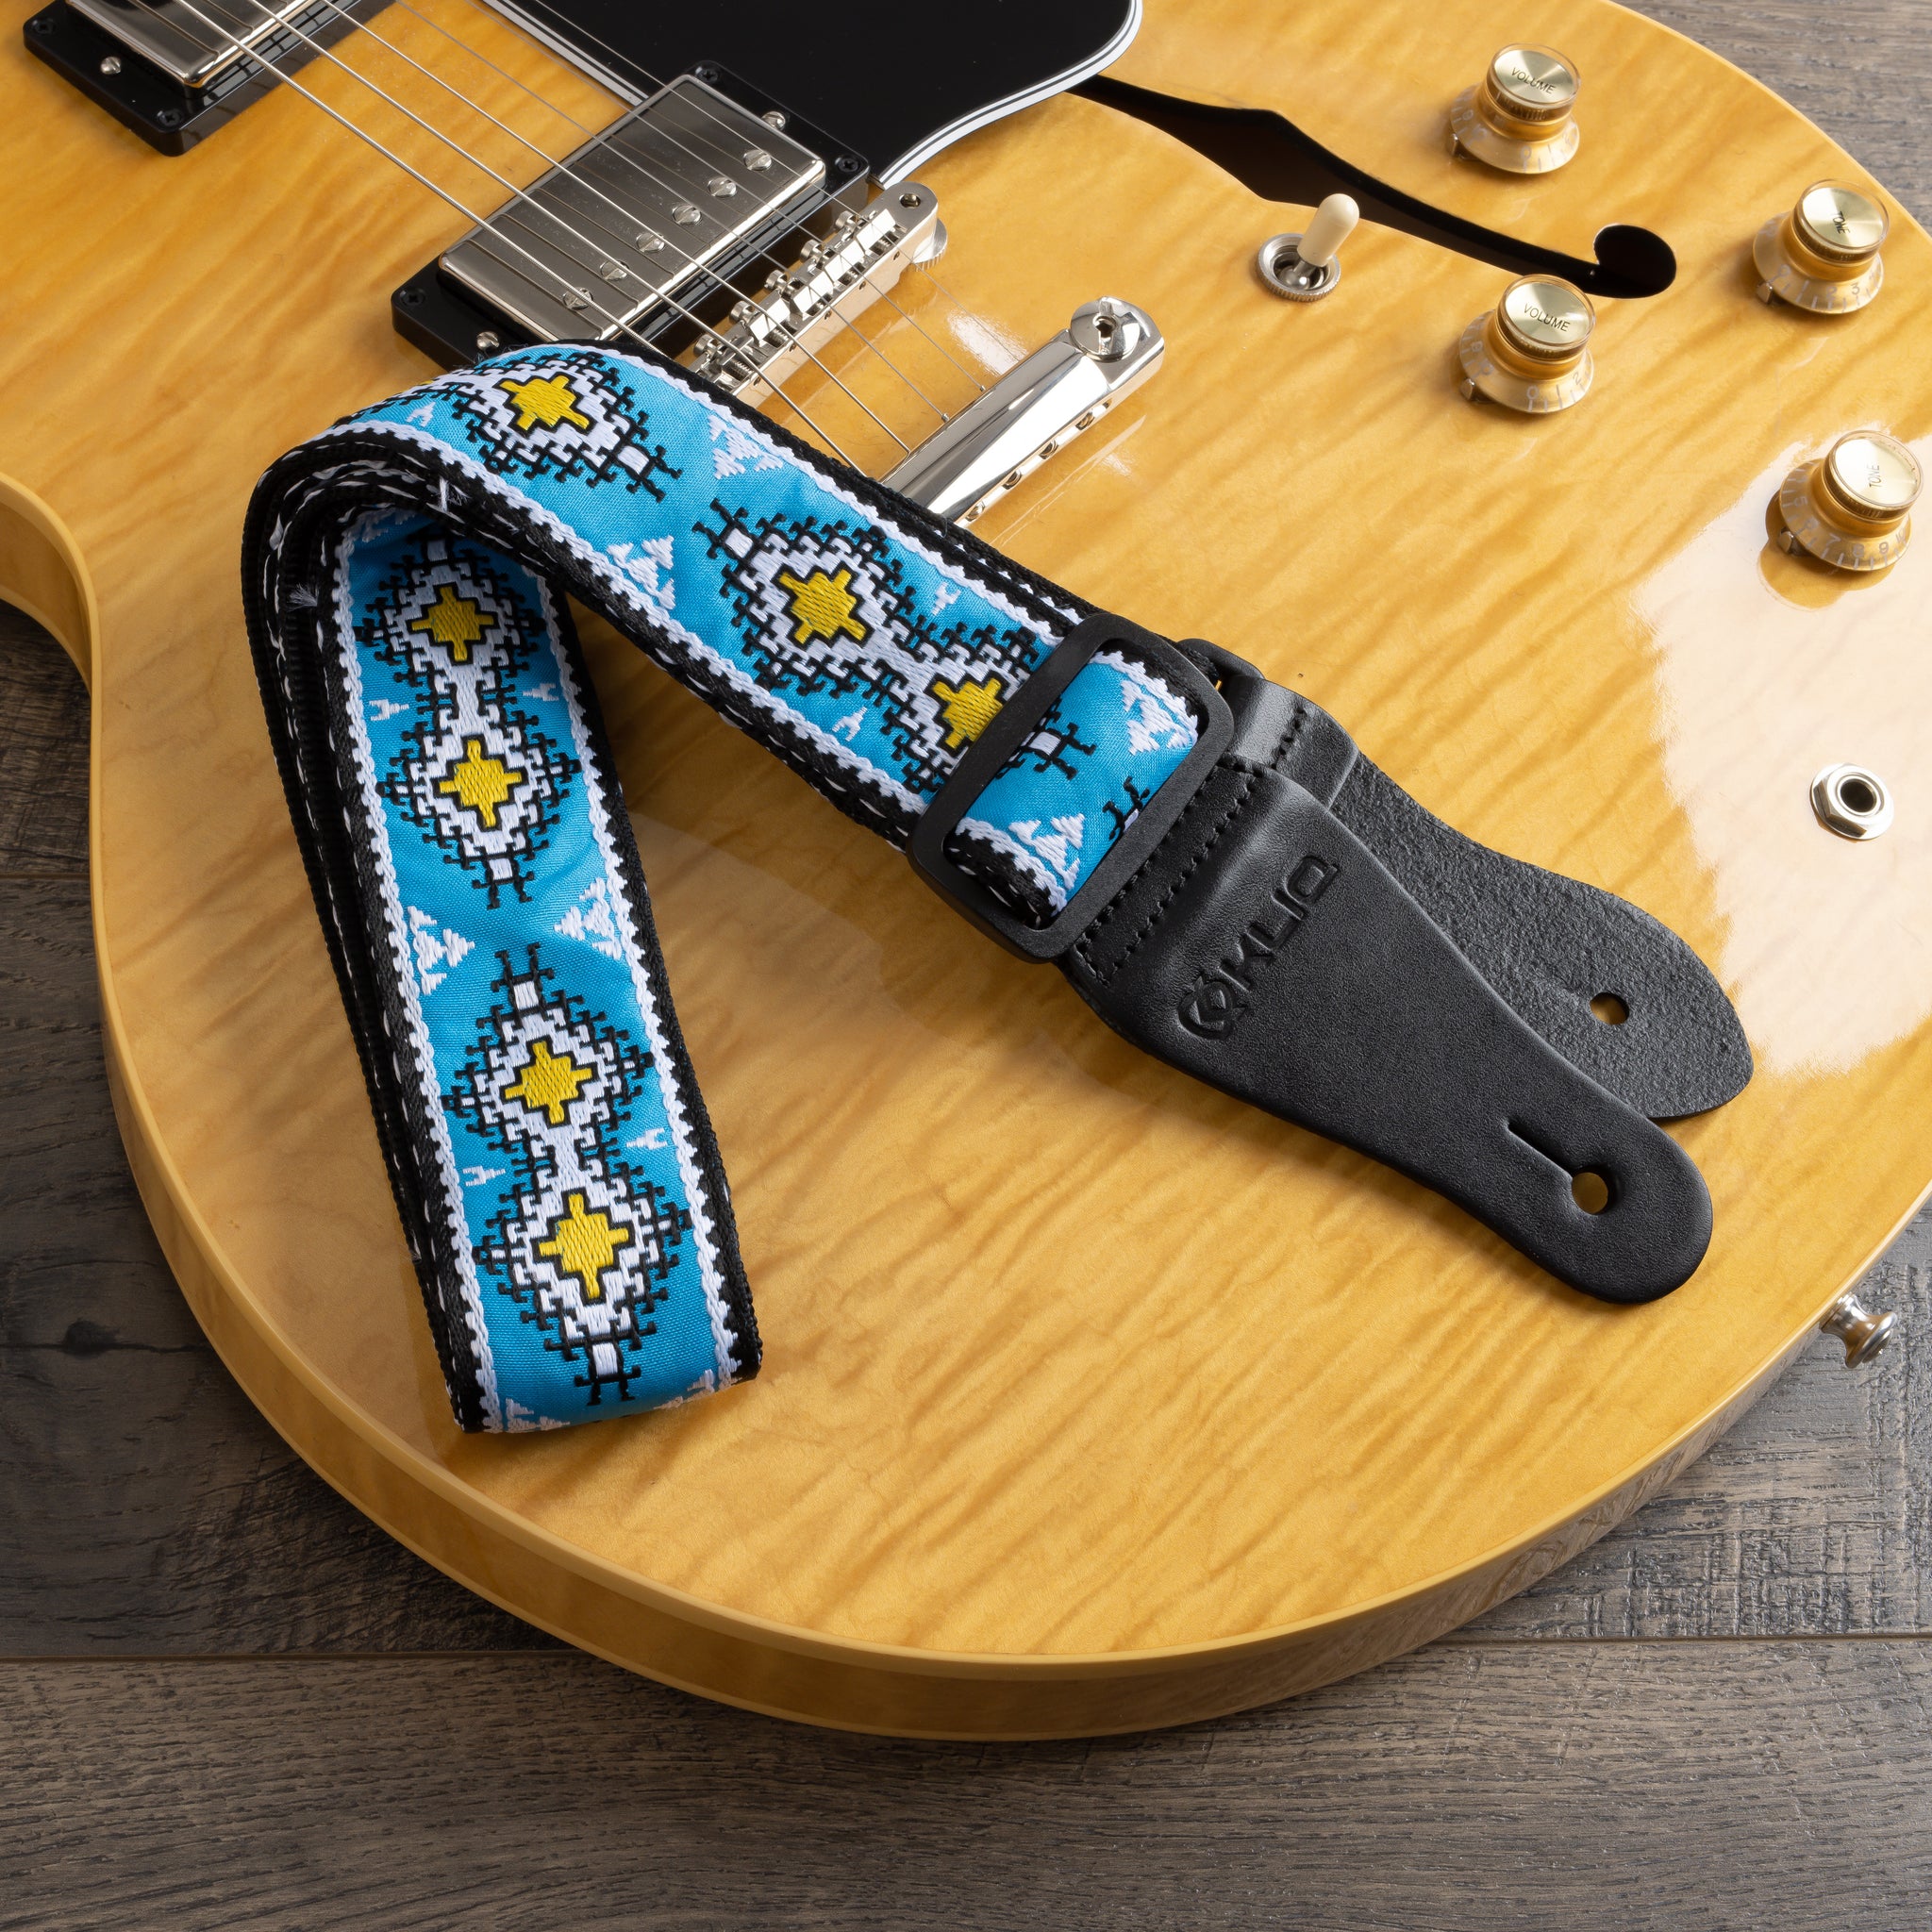 Guitar Strap for Acoustic Guitar , Electric Guitar and Bass Guitar, Adjustable Multi Color Woven Guitar Strap w/ Free Bonus 2 Picks + Strap Locks +